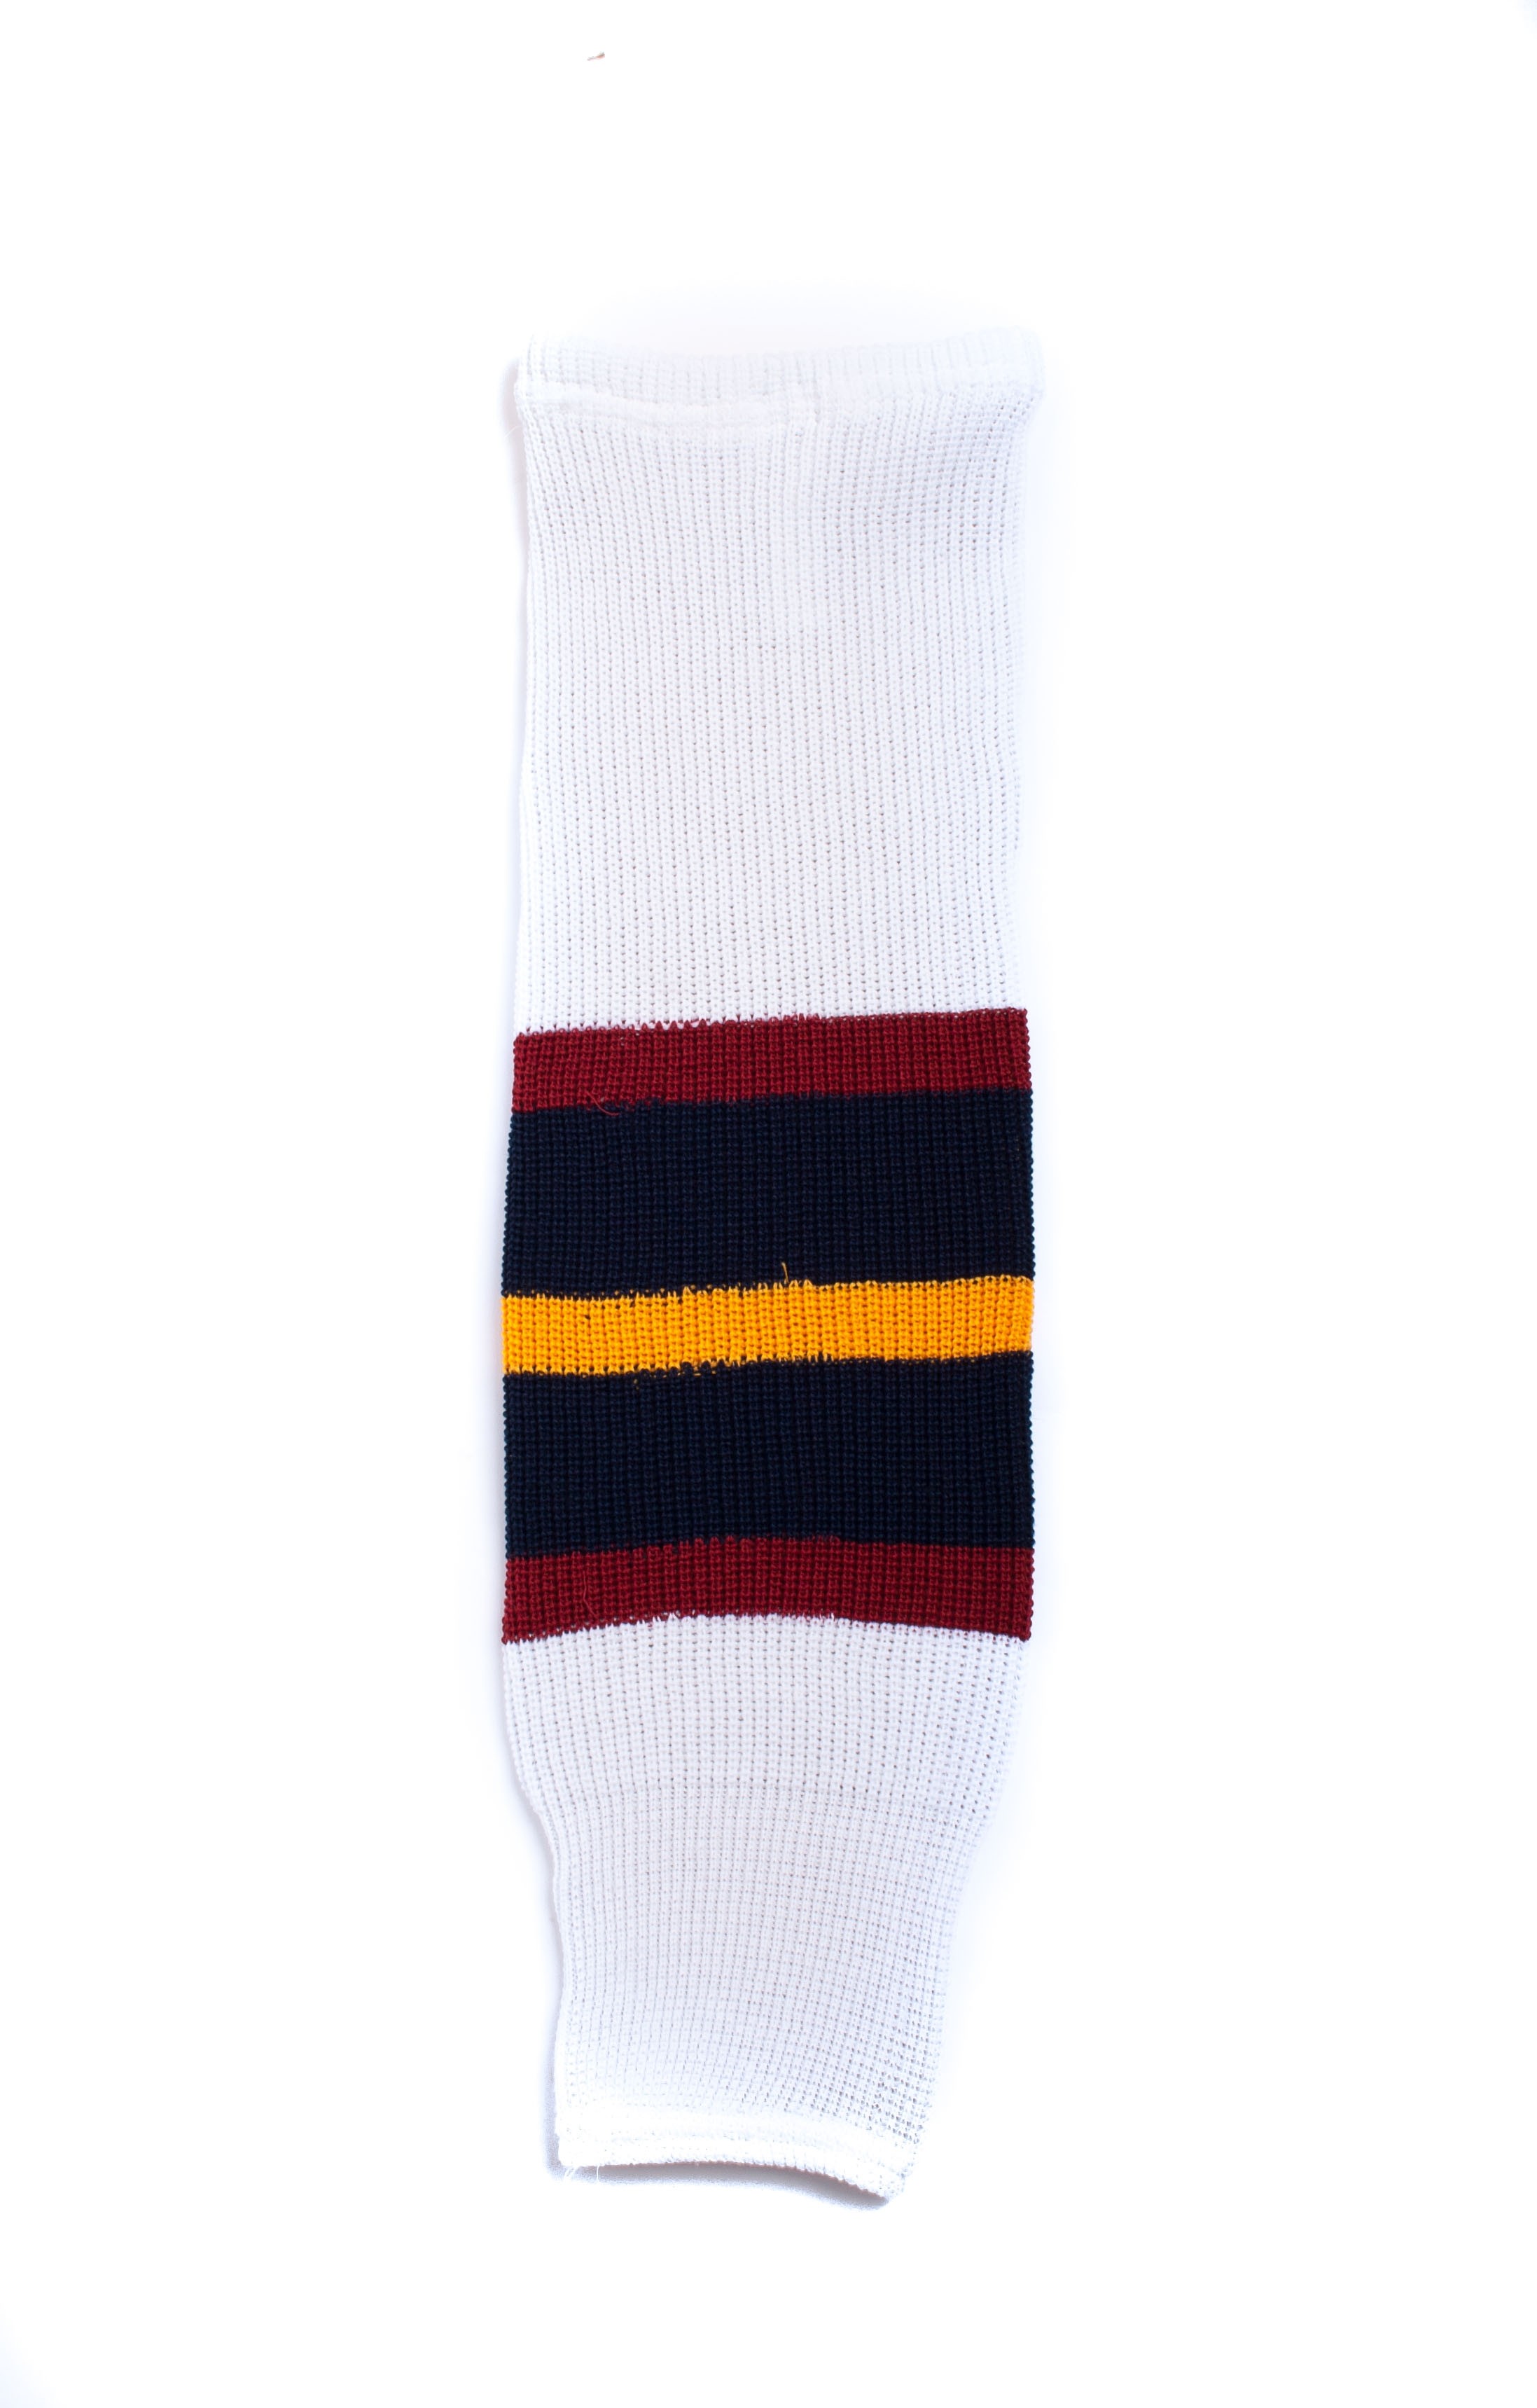 CCM Knit Youth Hockey Socks#019